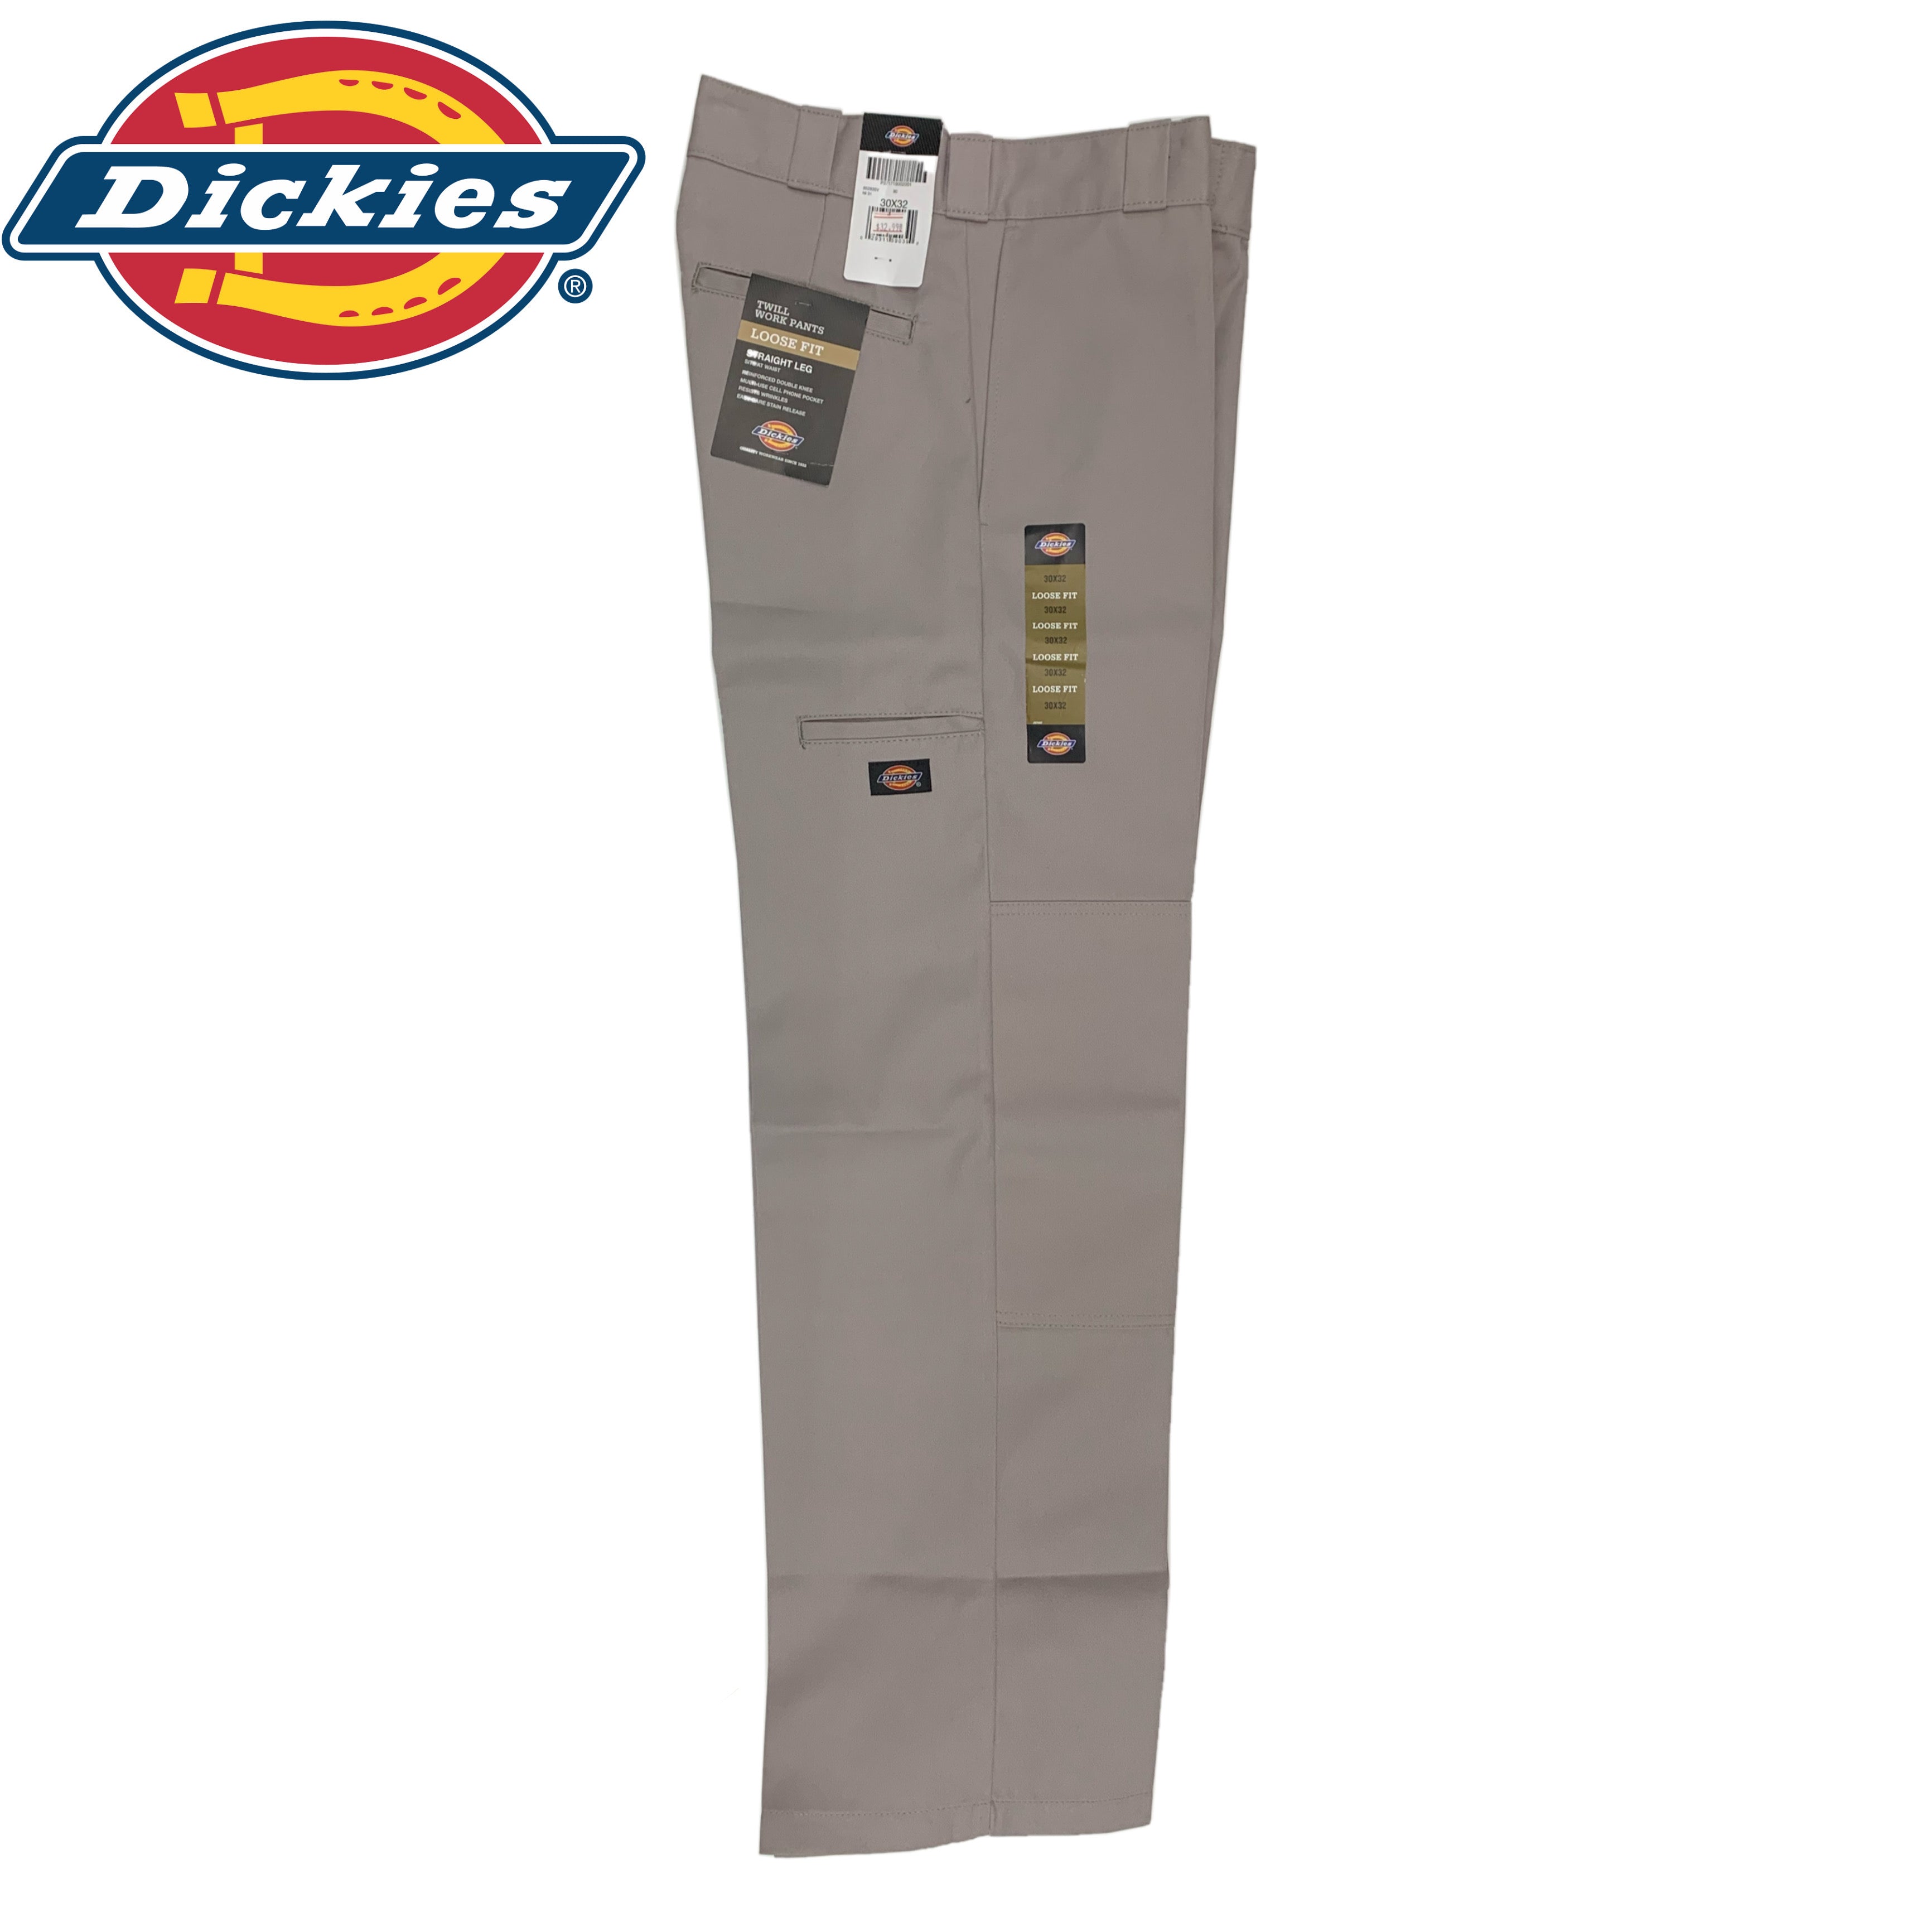 Dickies Loose Fit Pants (Size 28 - 40)